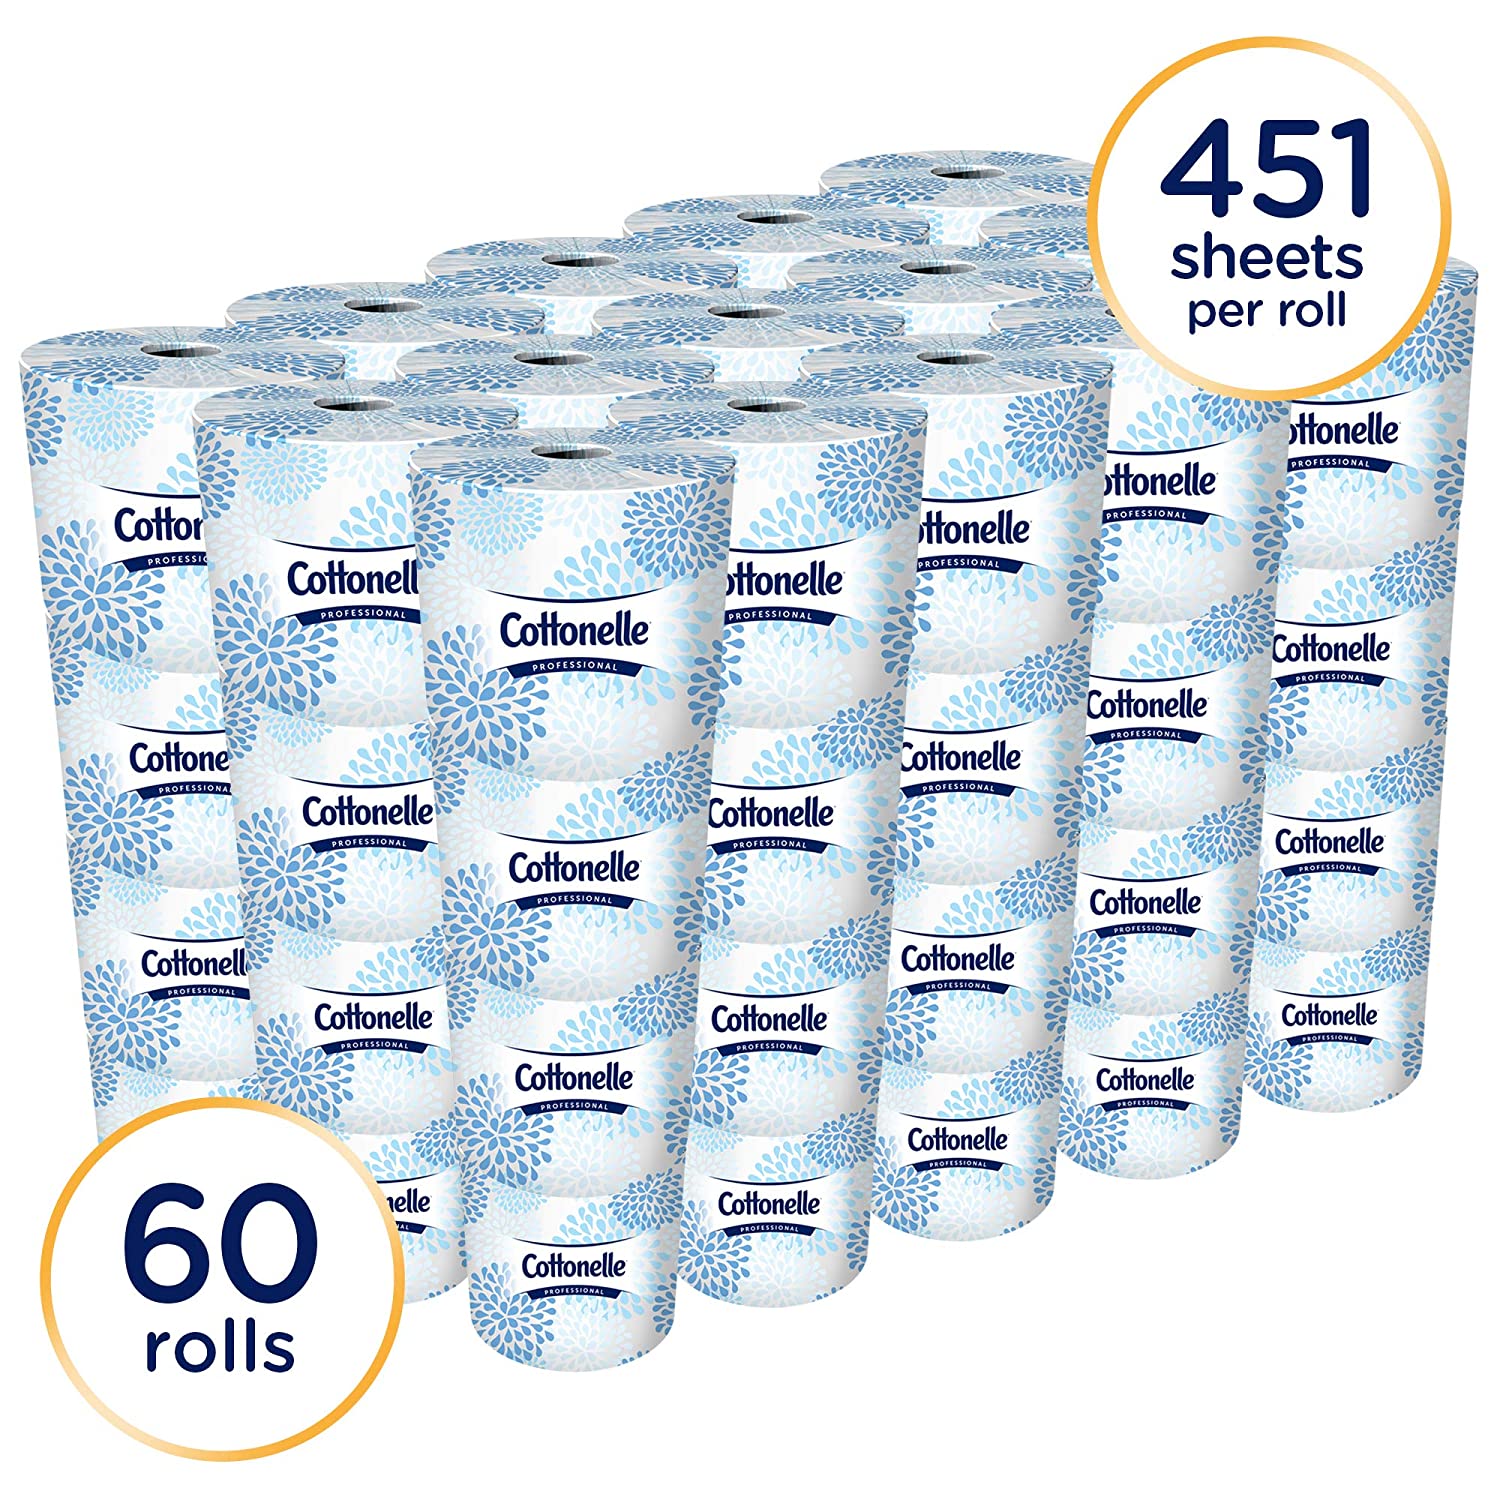 Scott Standard 2-Ply Toilet Paper Rolls, 80 Rolls